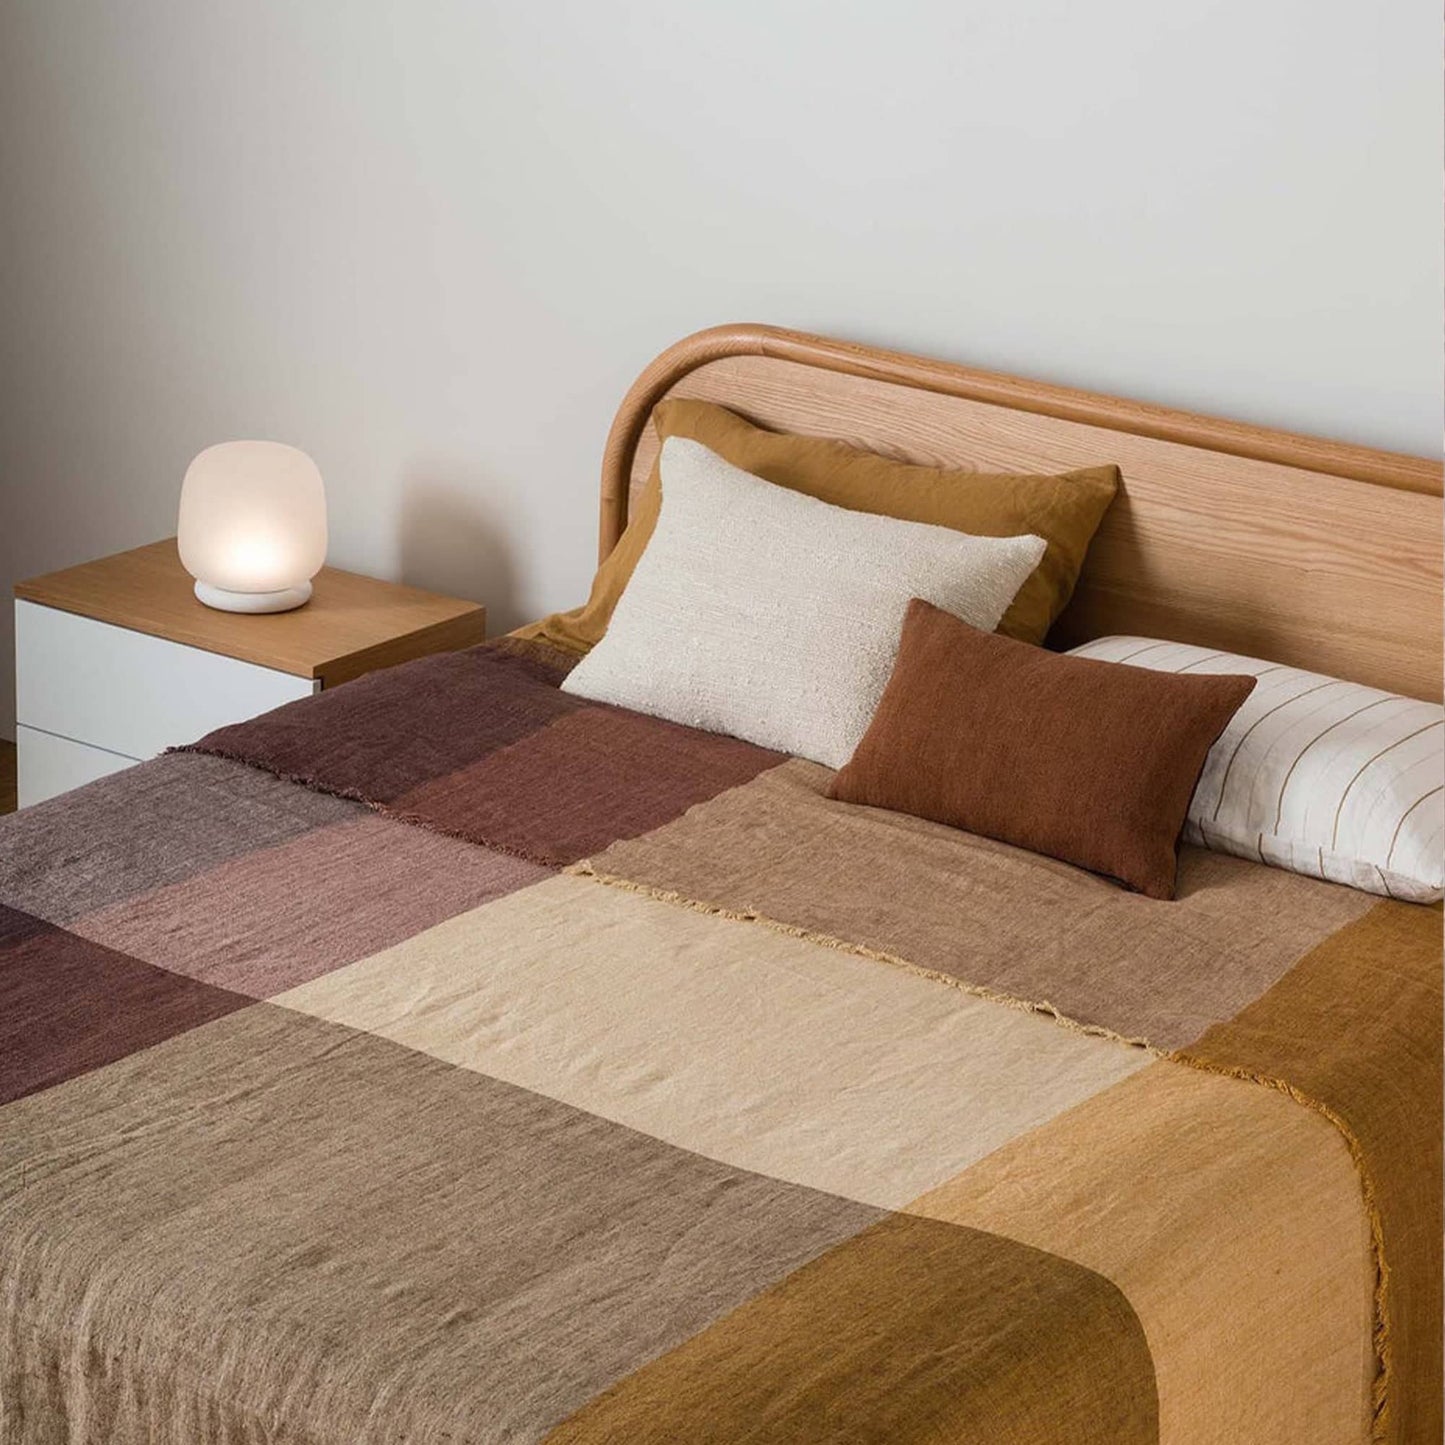 Morandi Queen Bedspread - Mulberry/Multi